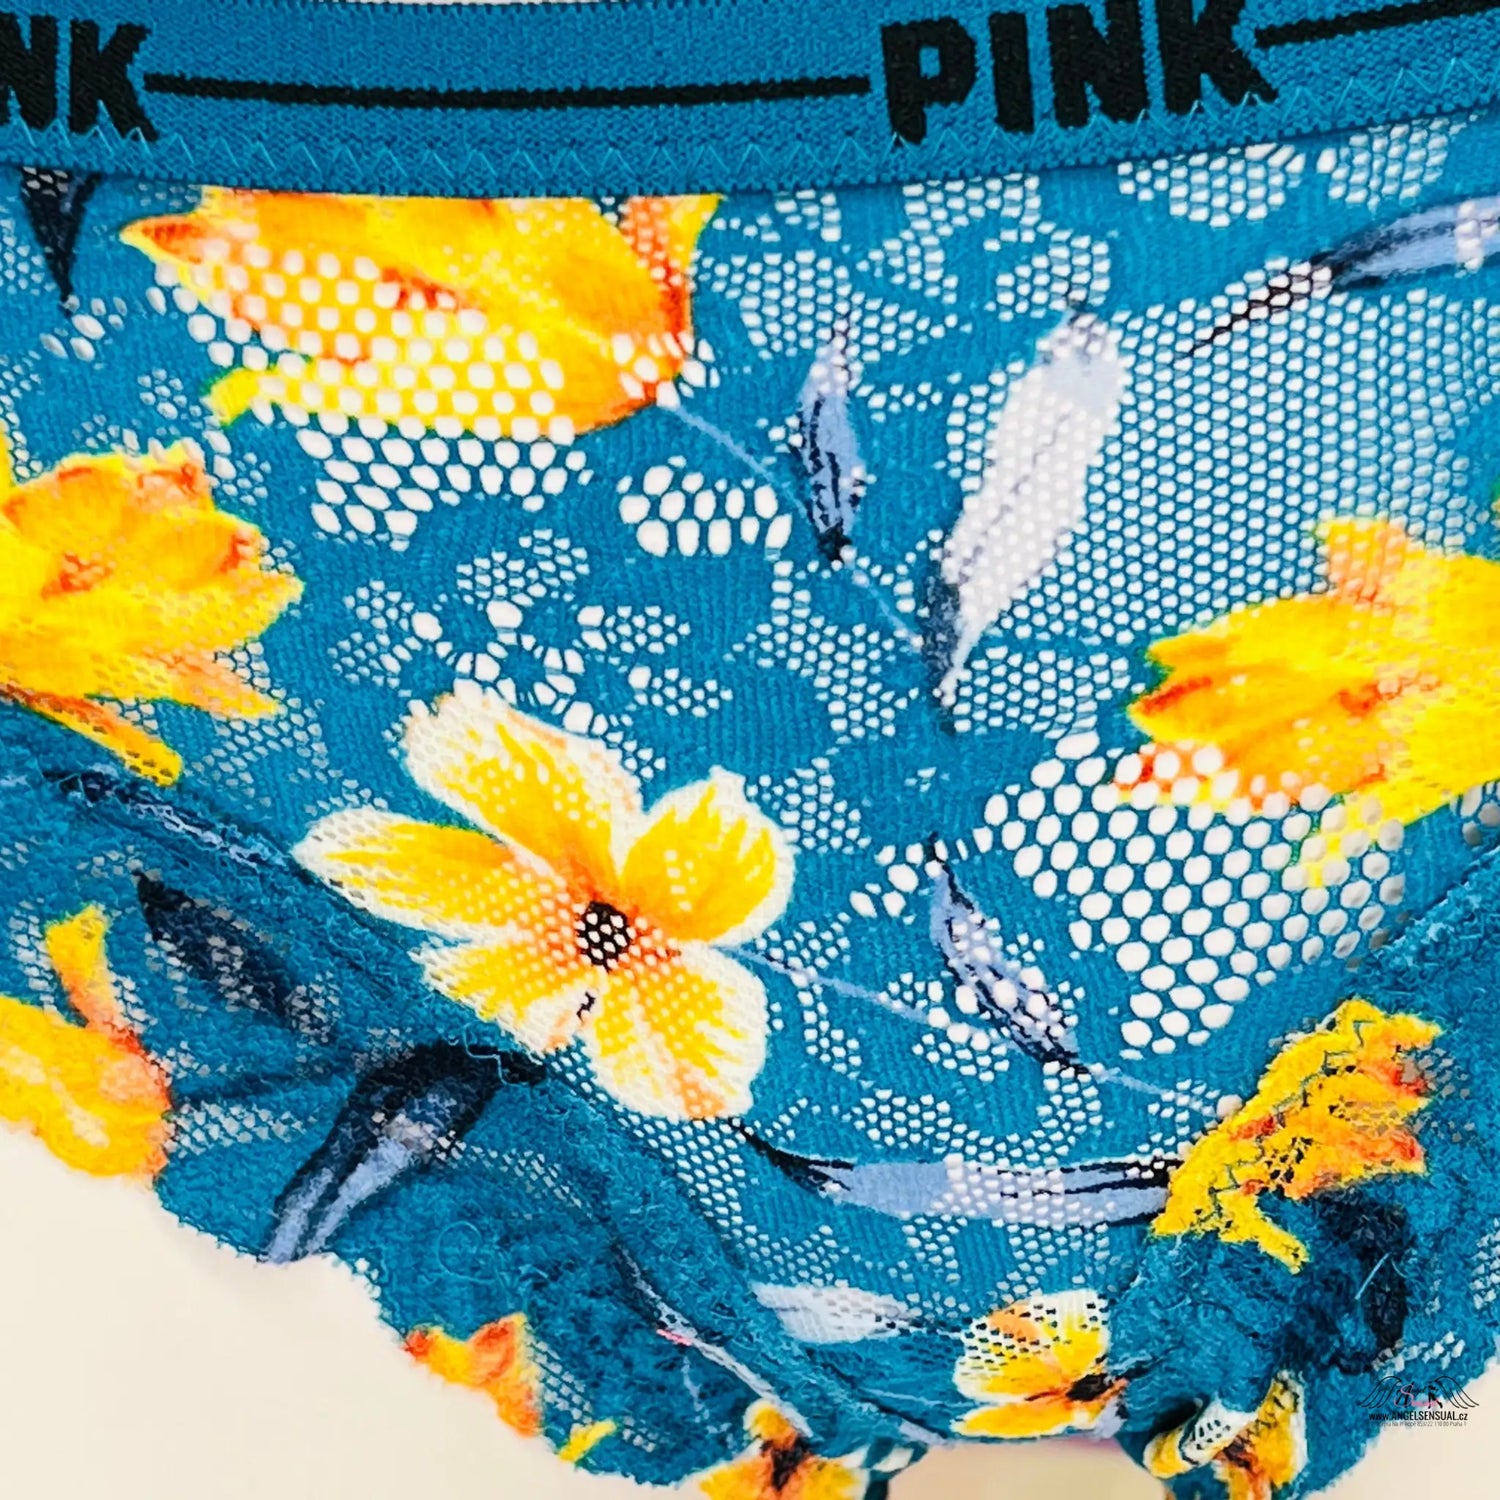 Krajkové kalhotky s květinami - Cheekster Victoria’s Secret